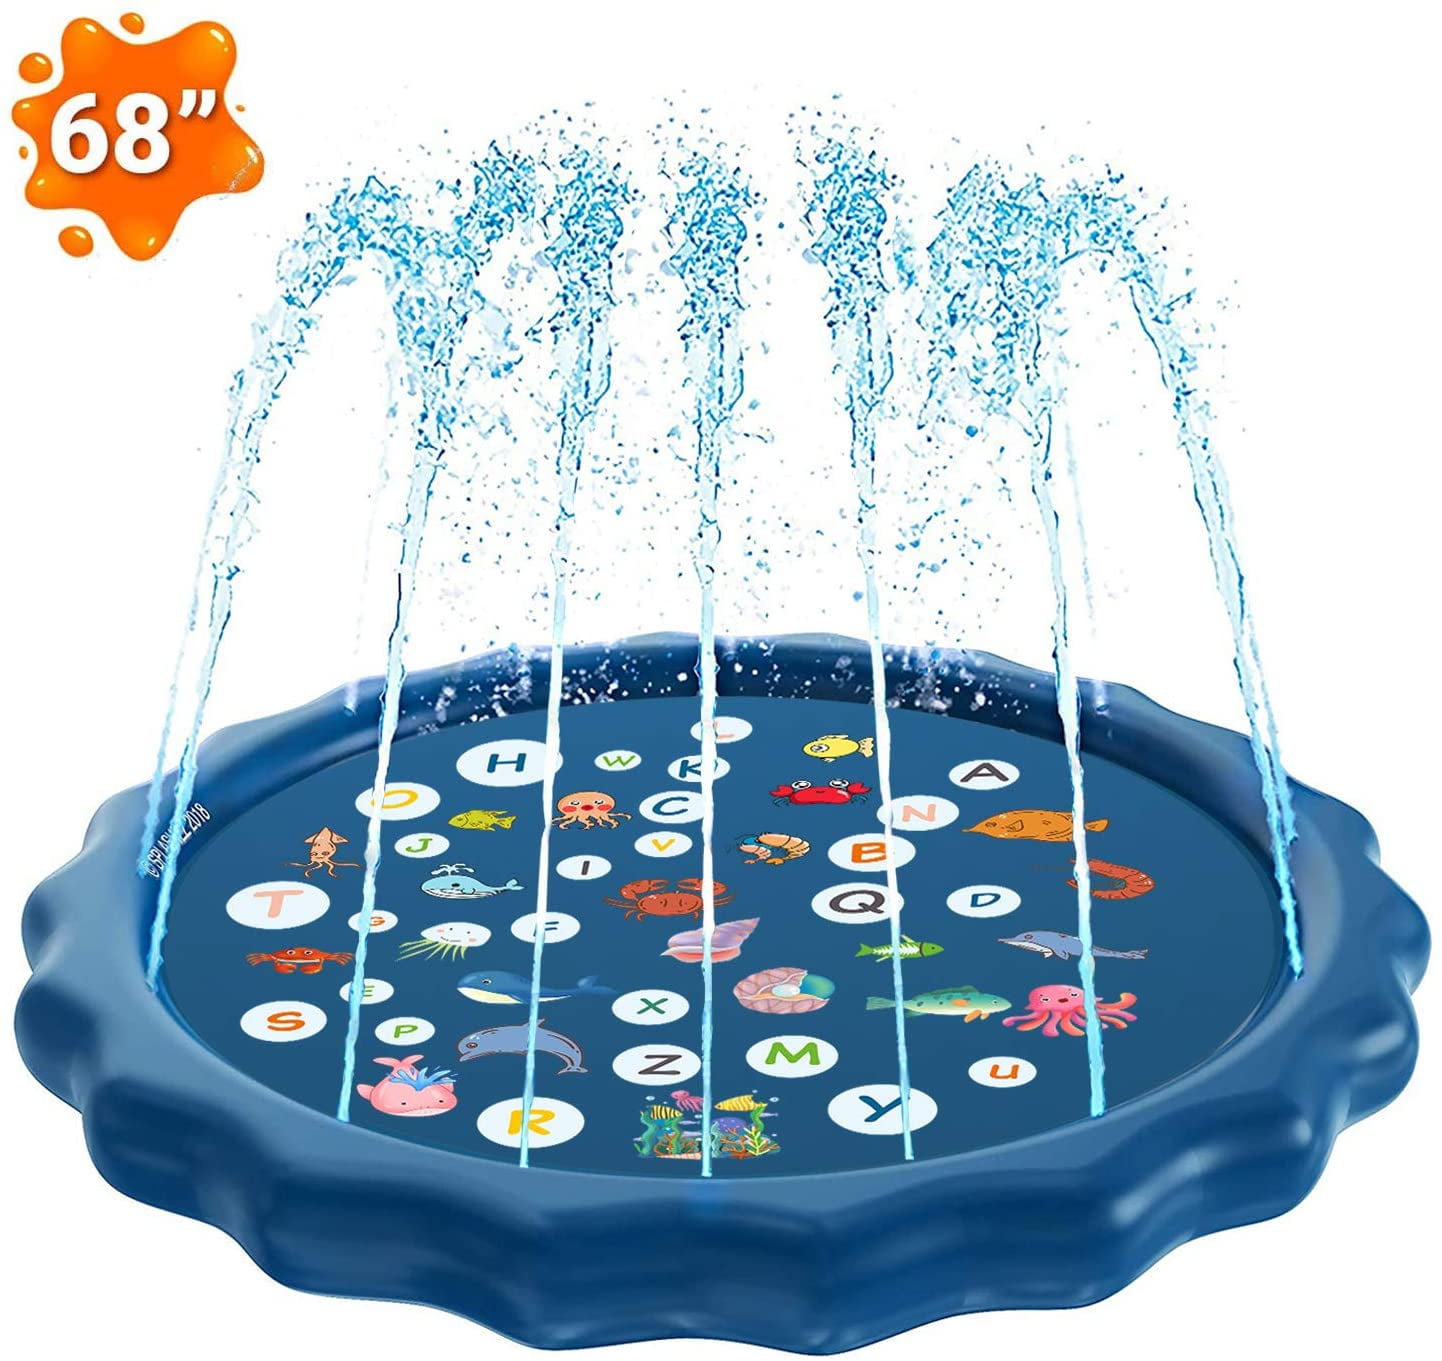 Sprinkler Toy Splash Play Pad with Wading Pool for Kids Toddlers Setibre 68 Sprinkle & Splash Play Mat Outdoor Water Play Toys 